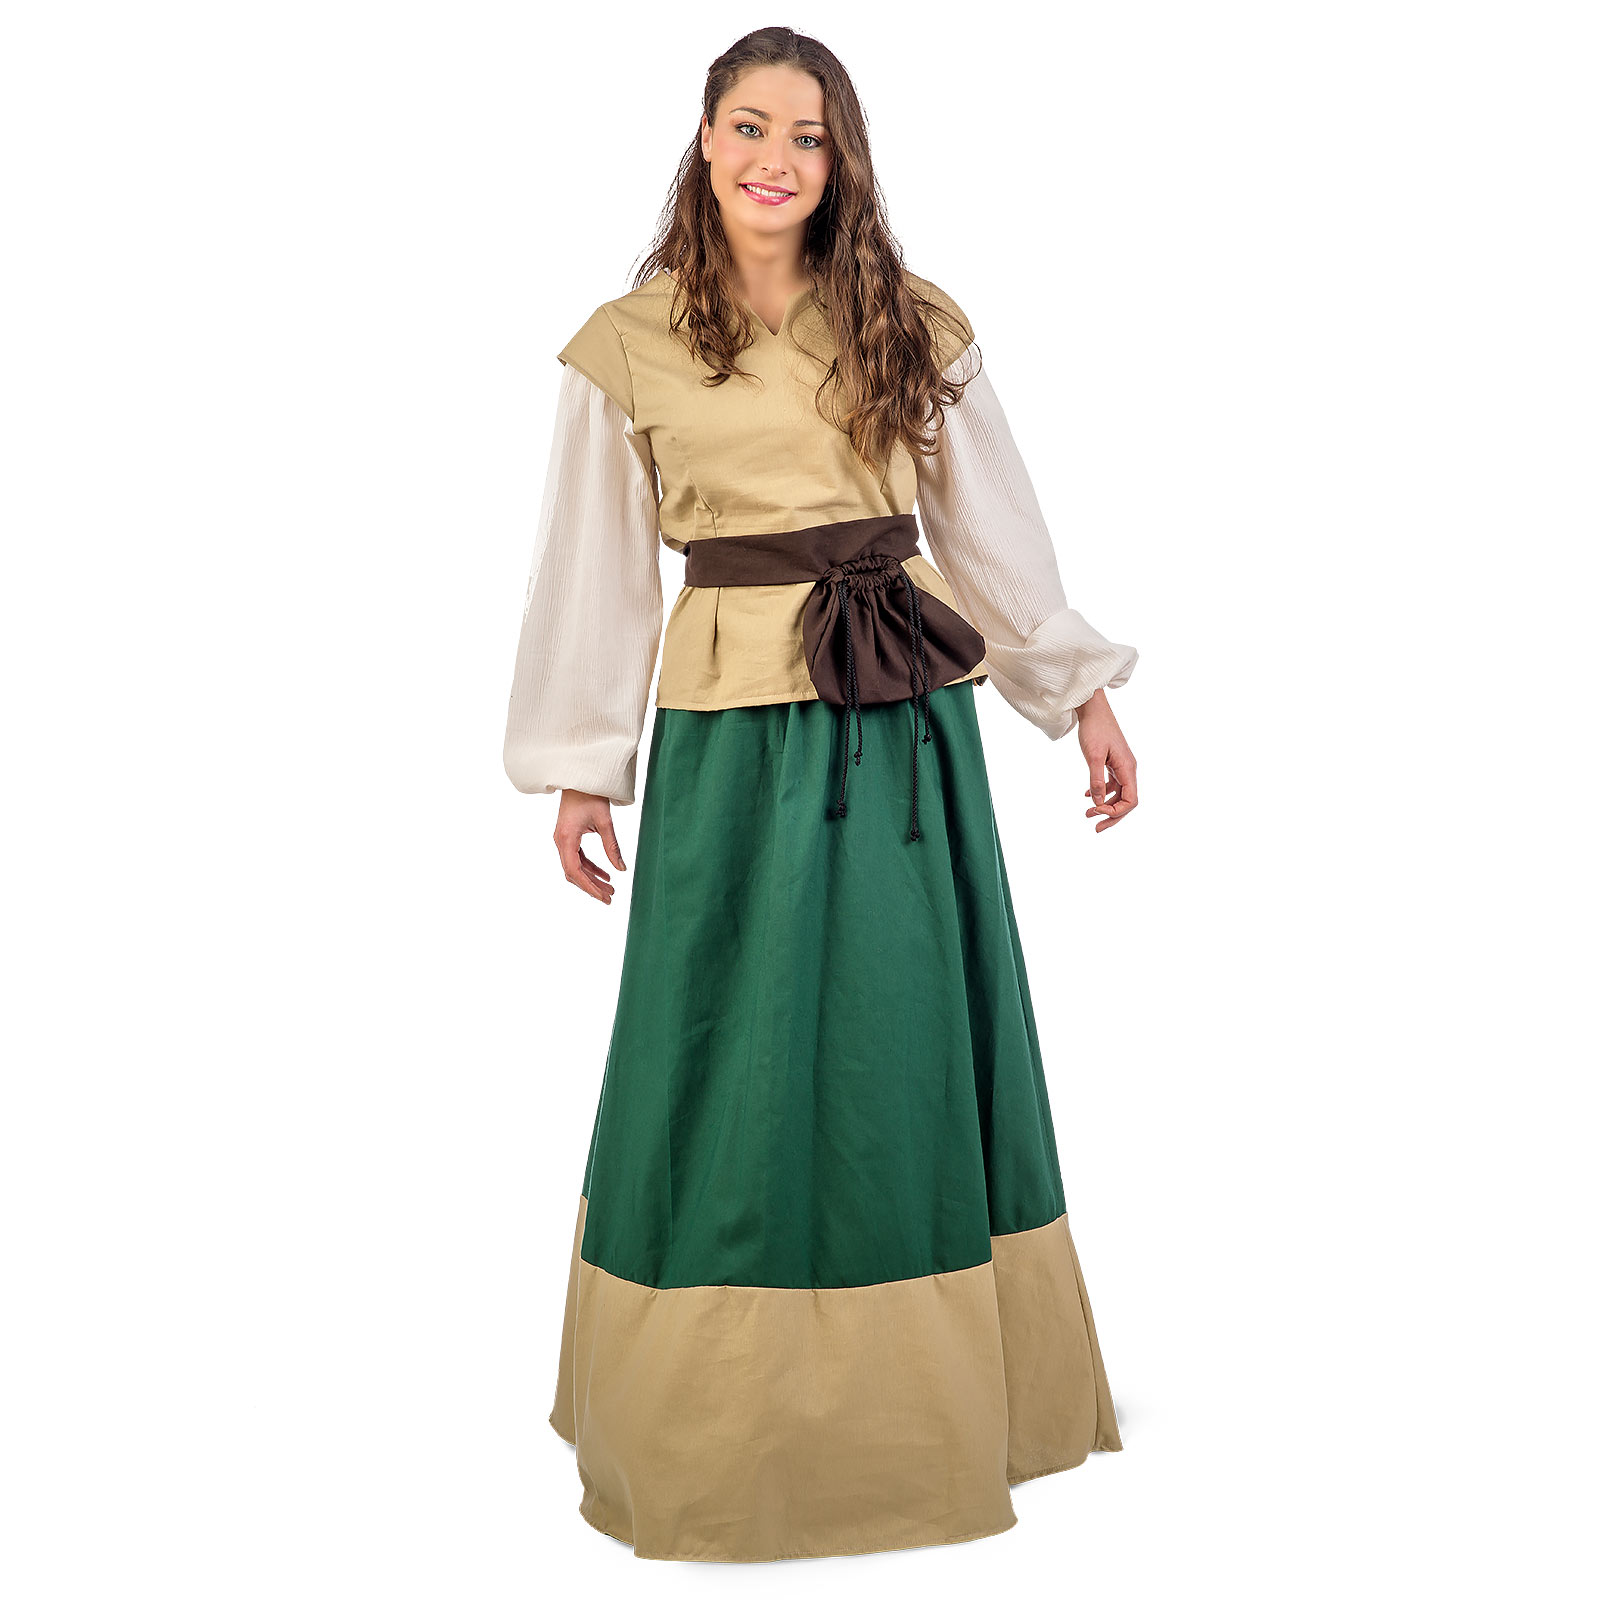 Mittelalter Damen Kostüm Juana beige-grün